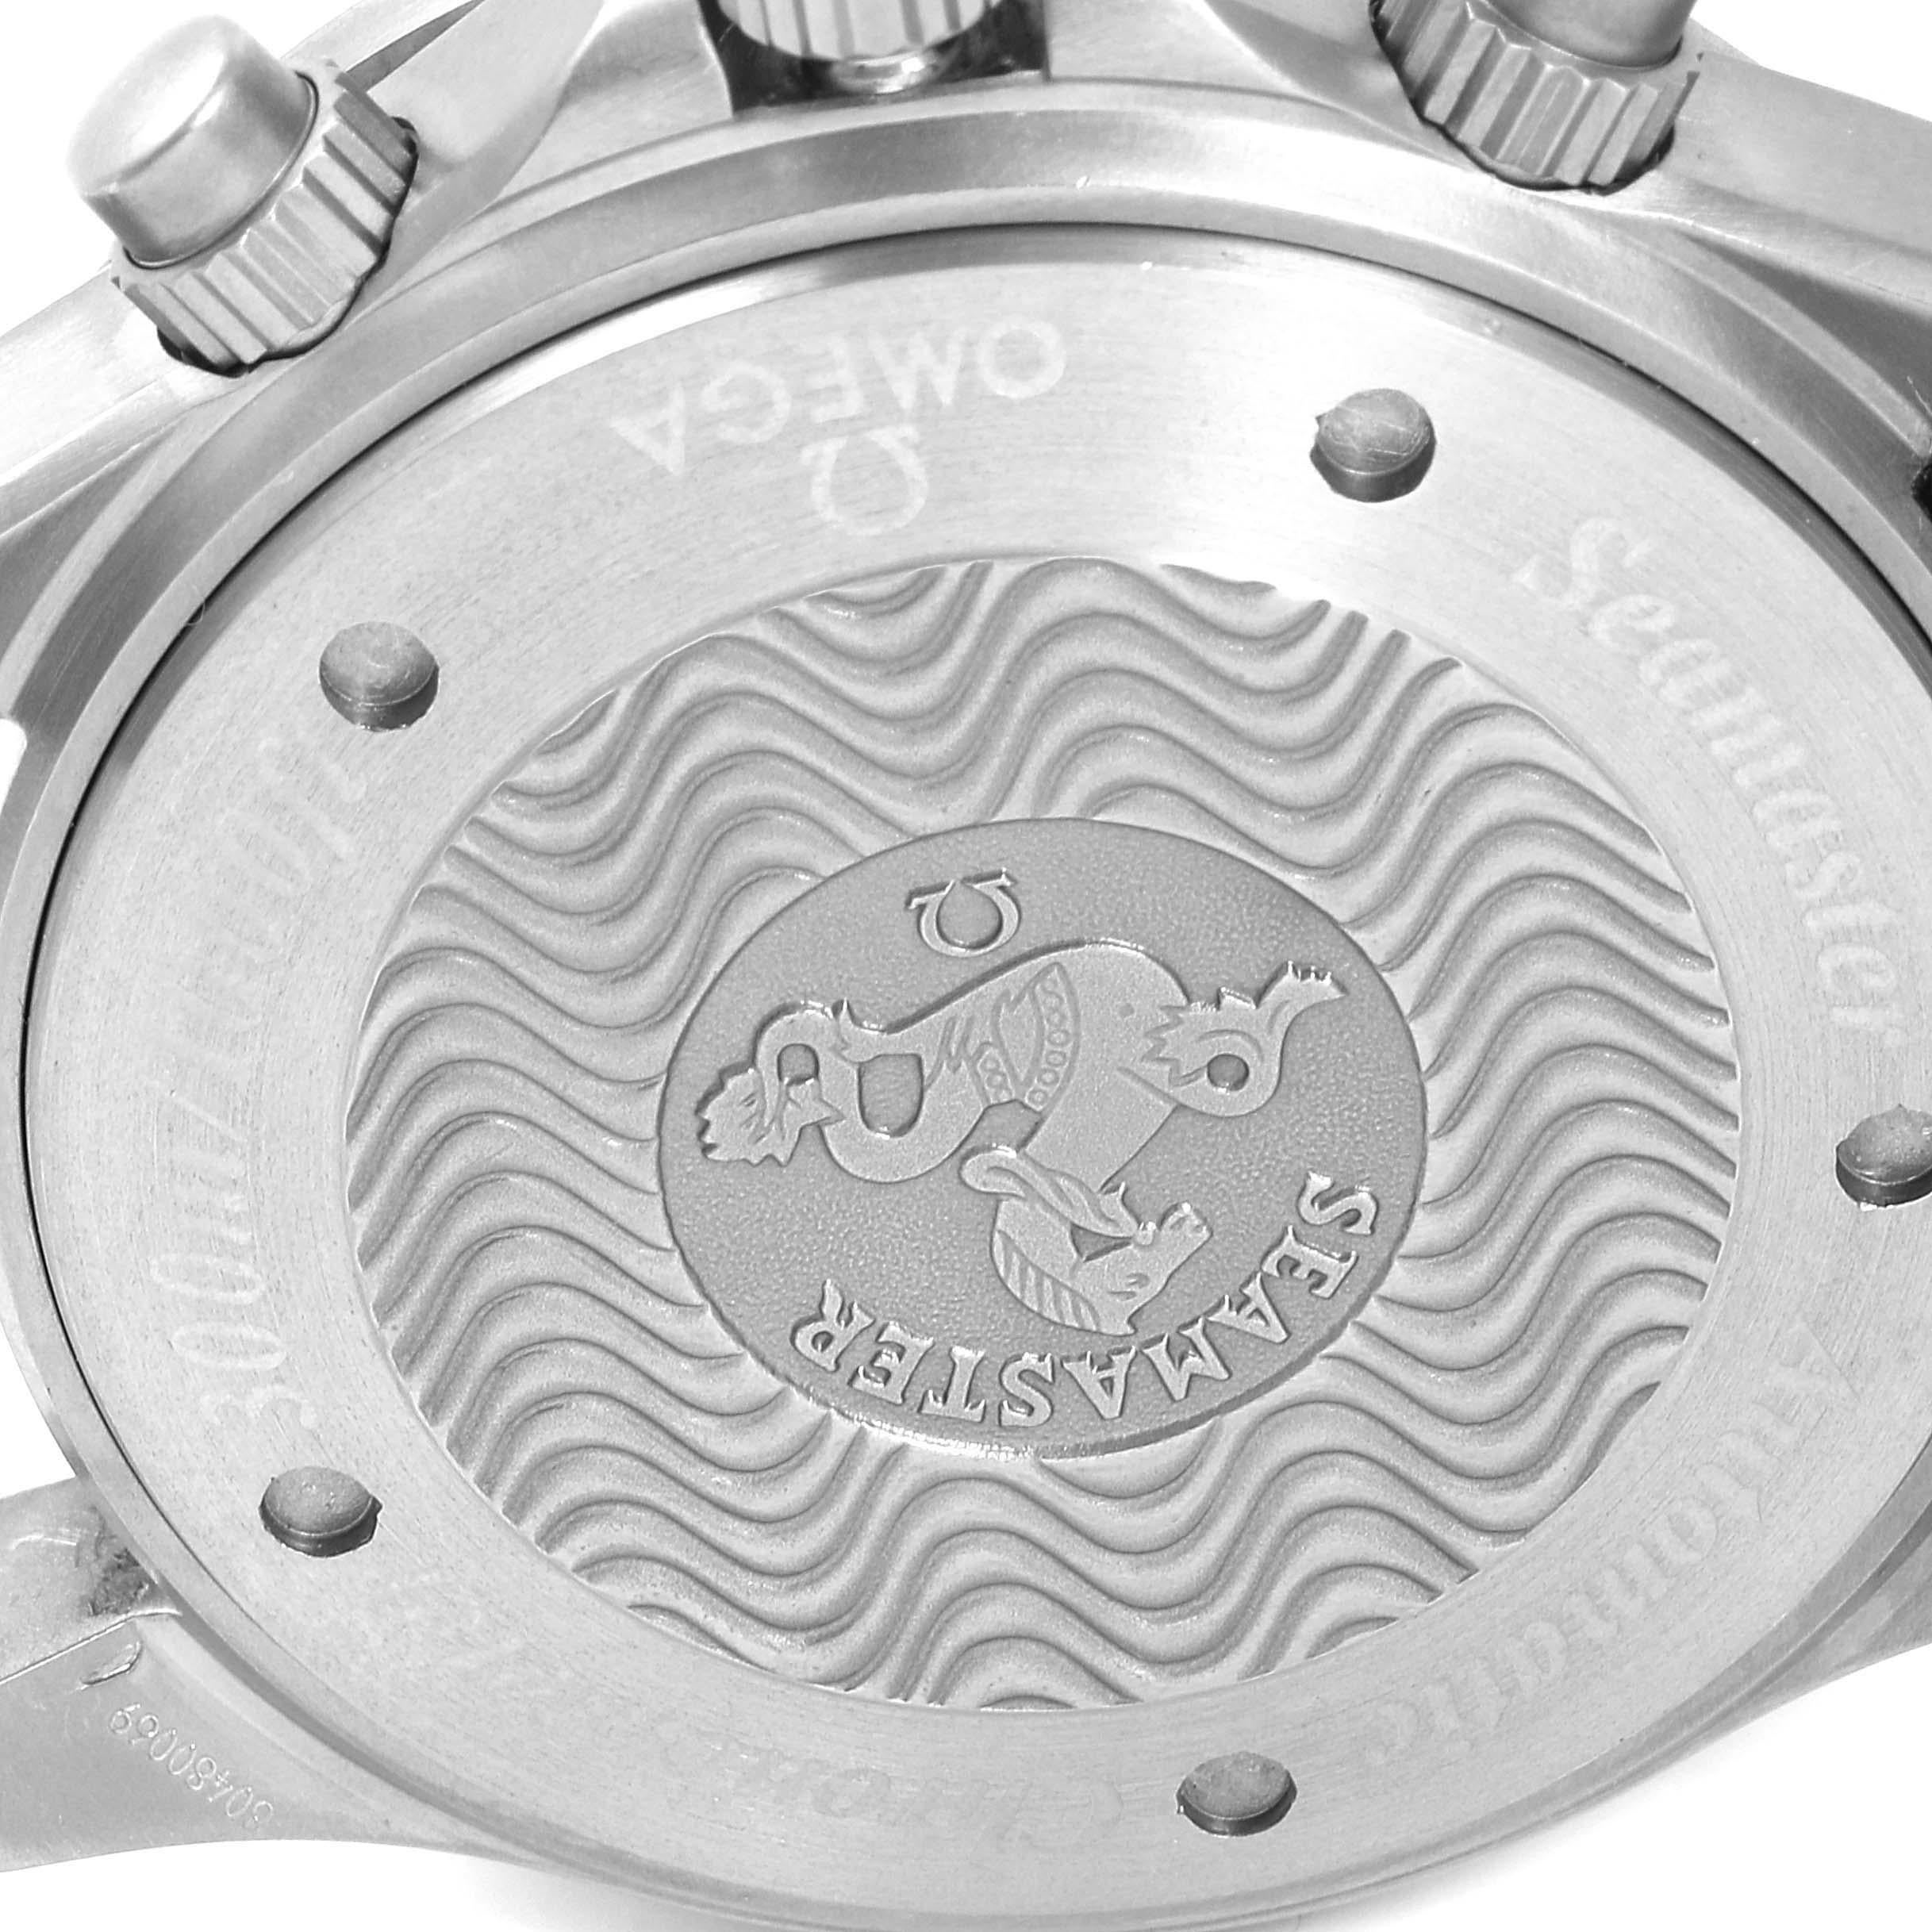 Omega Seamaster Regatta Racing Titanium Men's Watch 2269.52.00 For Sale 4